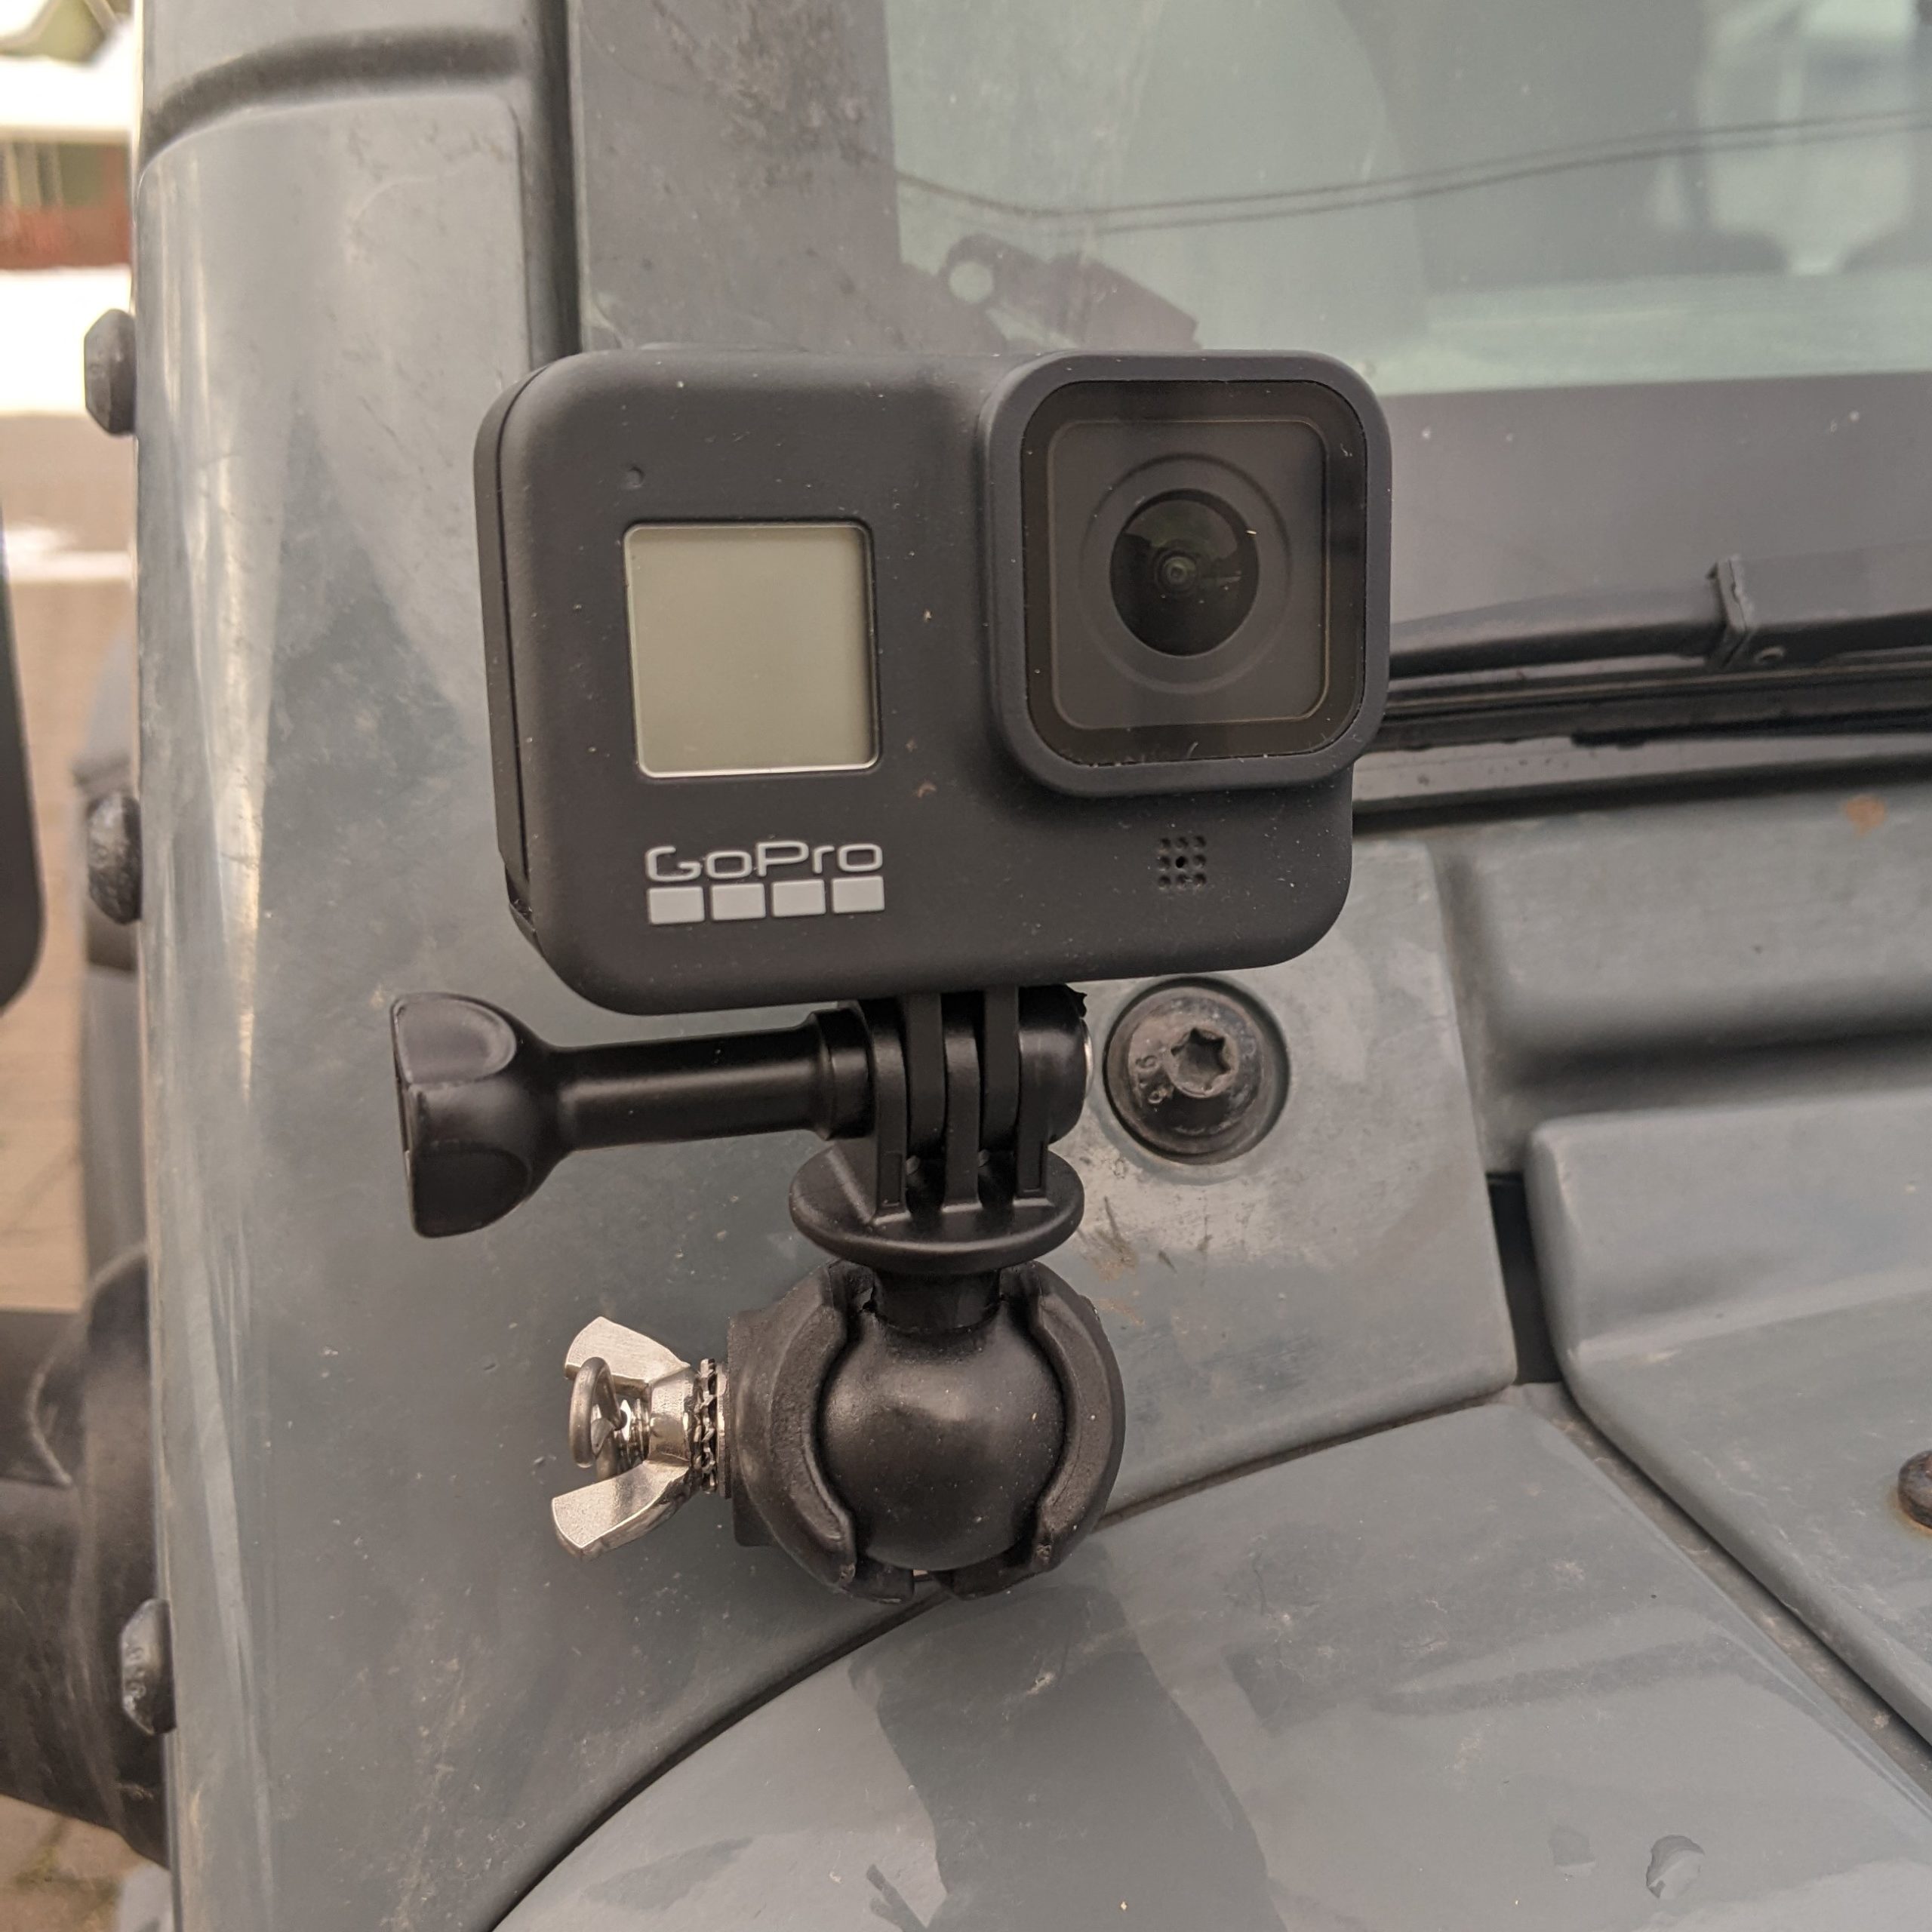 Jeep GoPro Mount - MyPilotPro - $ - Guaranteed for Life!